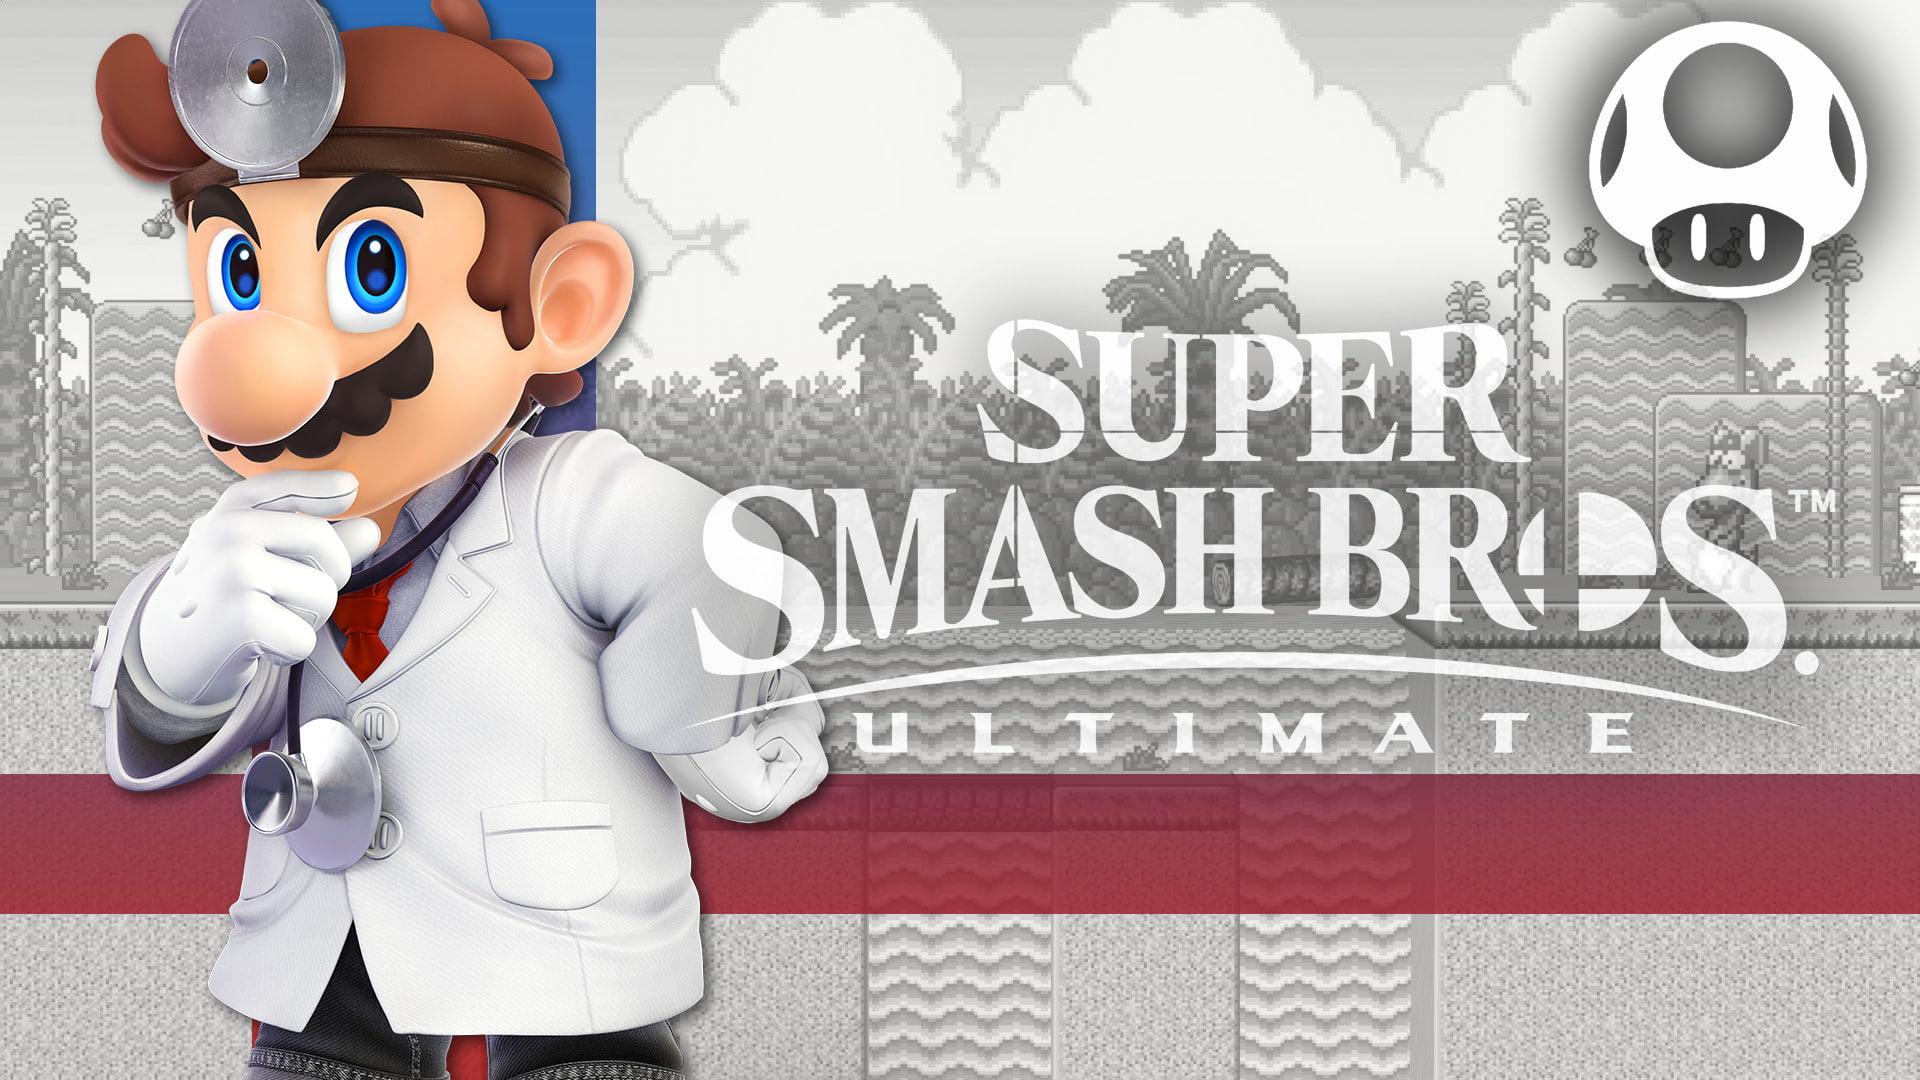 HD wallpaper: Video Game, Super Smash Bros. Ultimate, Dr. Mario